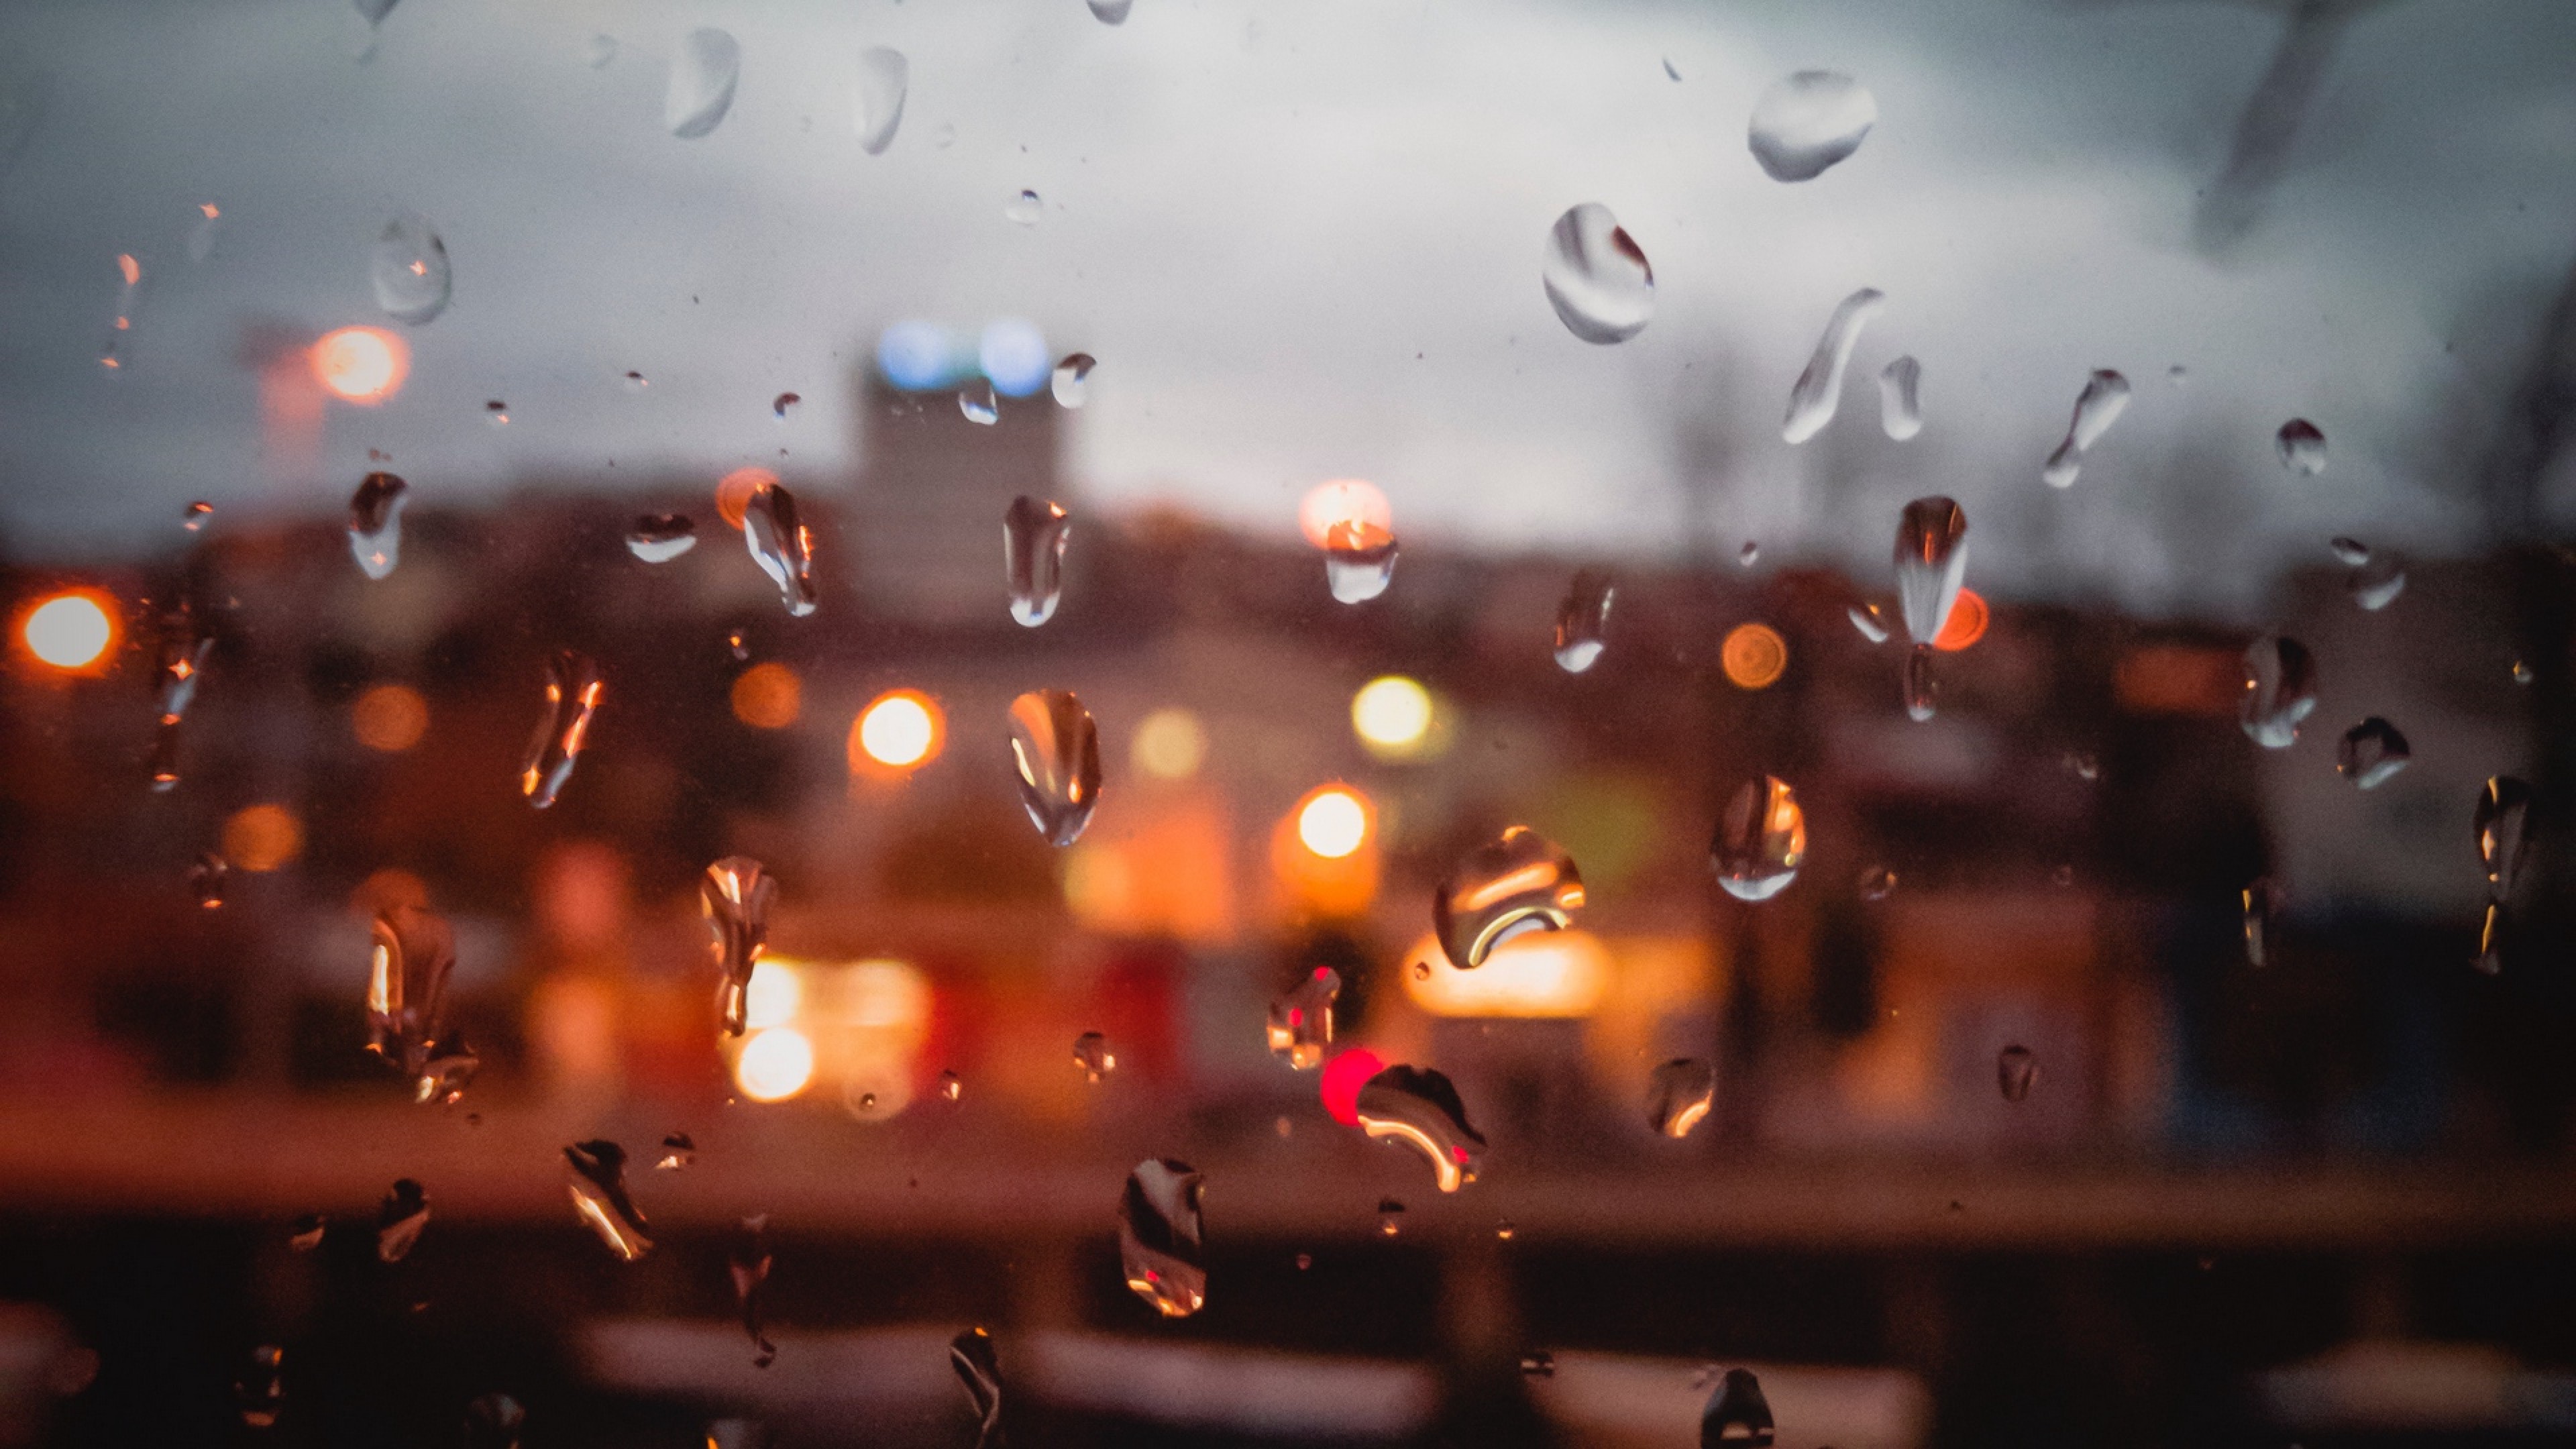 Вечер 2 капли. Капли на стекле. Капли дождя. Дождь за окном. Капли дождя на стекле.